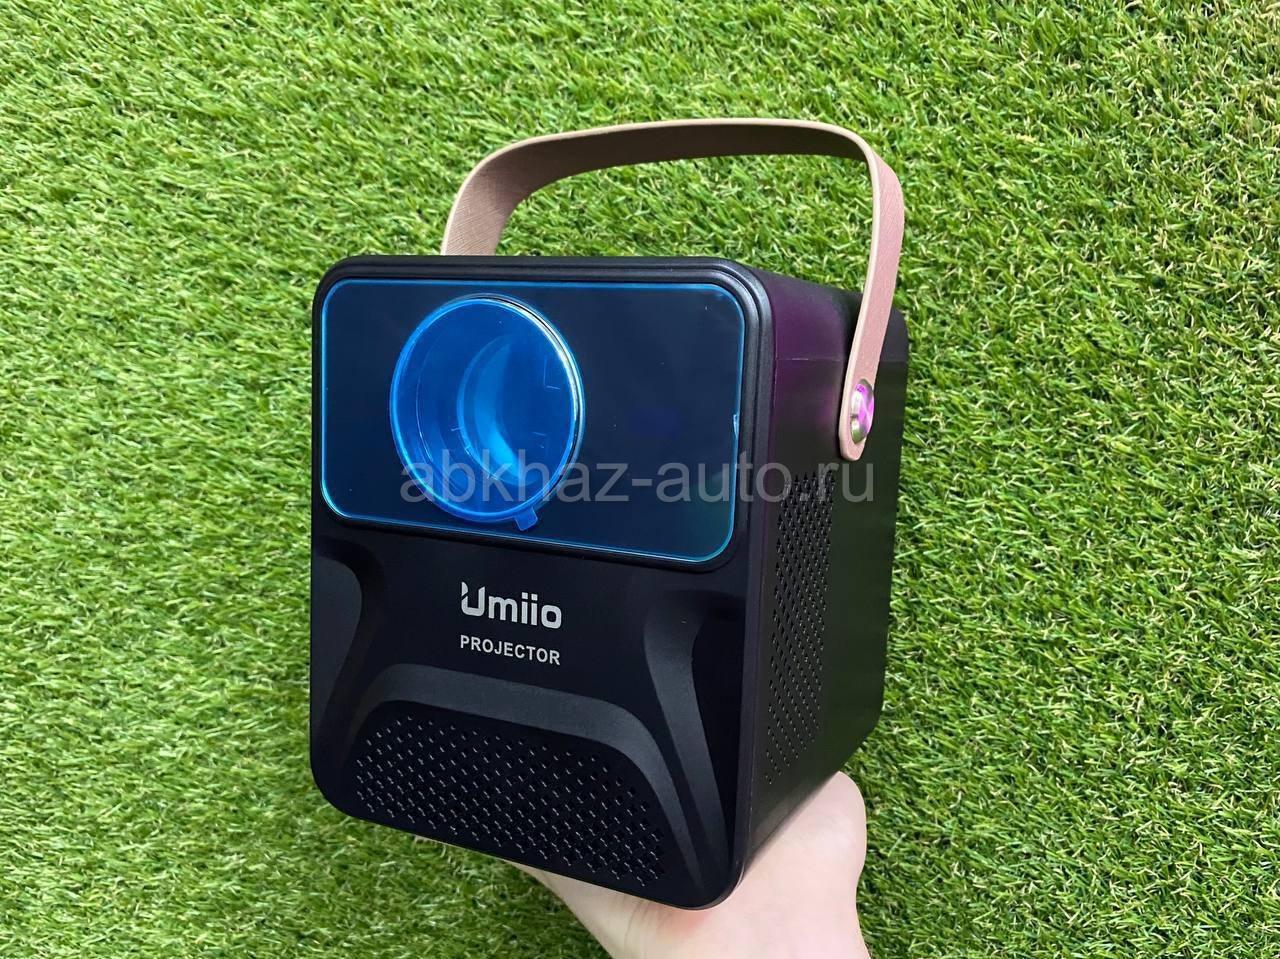 Umiio Projector p860. Портативный проектор Umiio p860. Проектор Umiio a007. Проектор Umiio Projector p860 , чёрный. Umiio p10 ultra